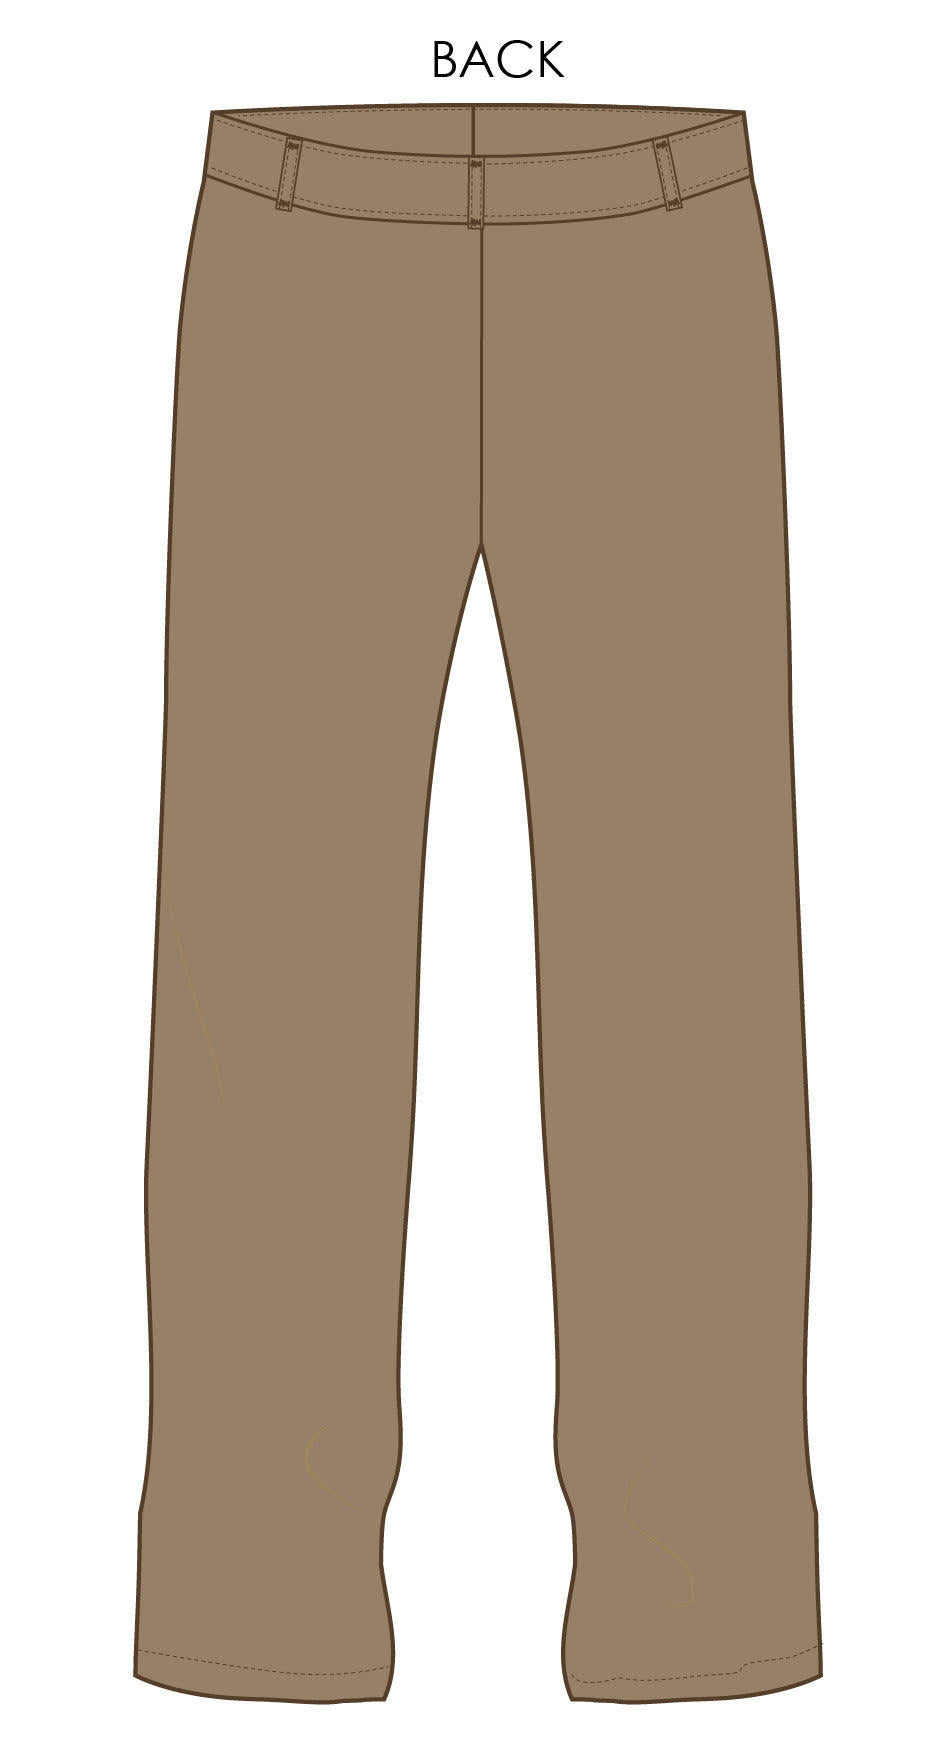 AIS Trouser Elasticated (KG - Grades)